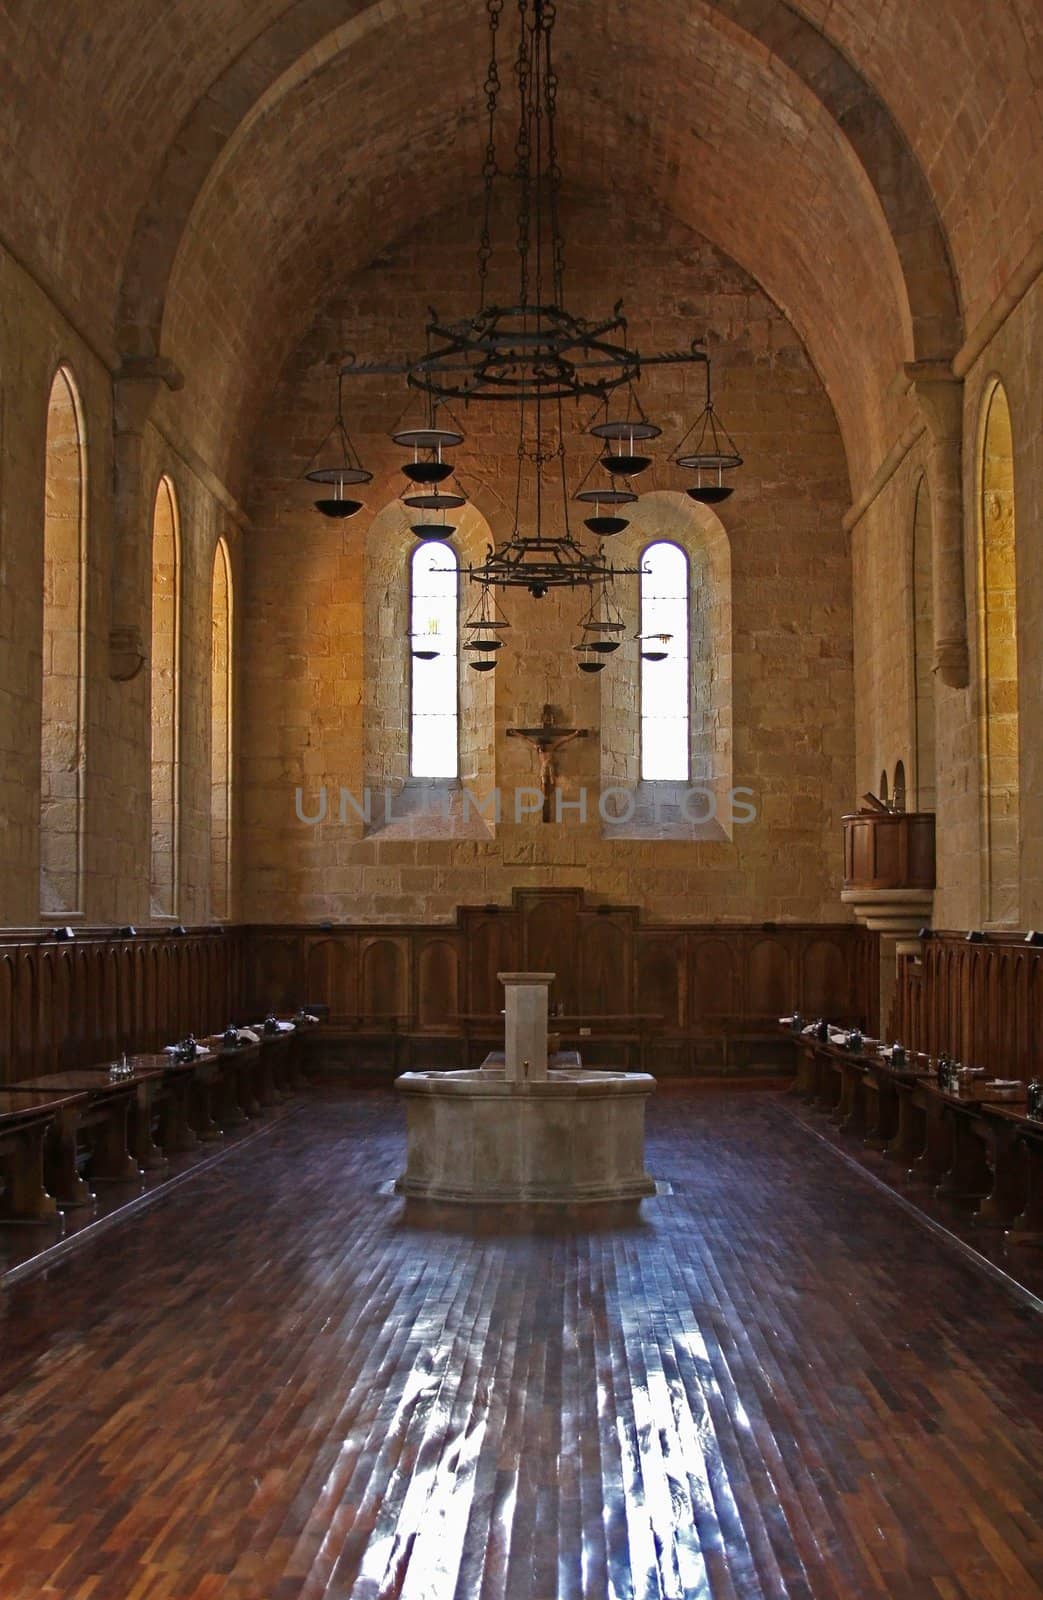 Chapel by Digoarpi